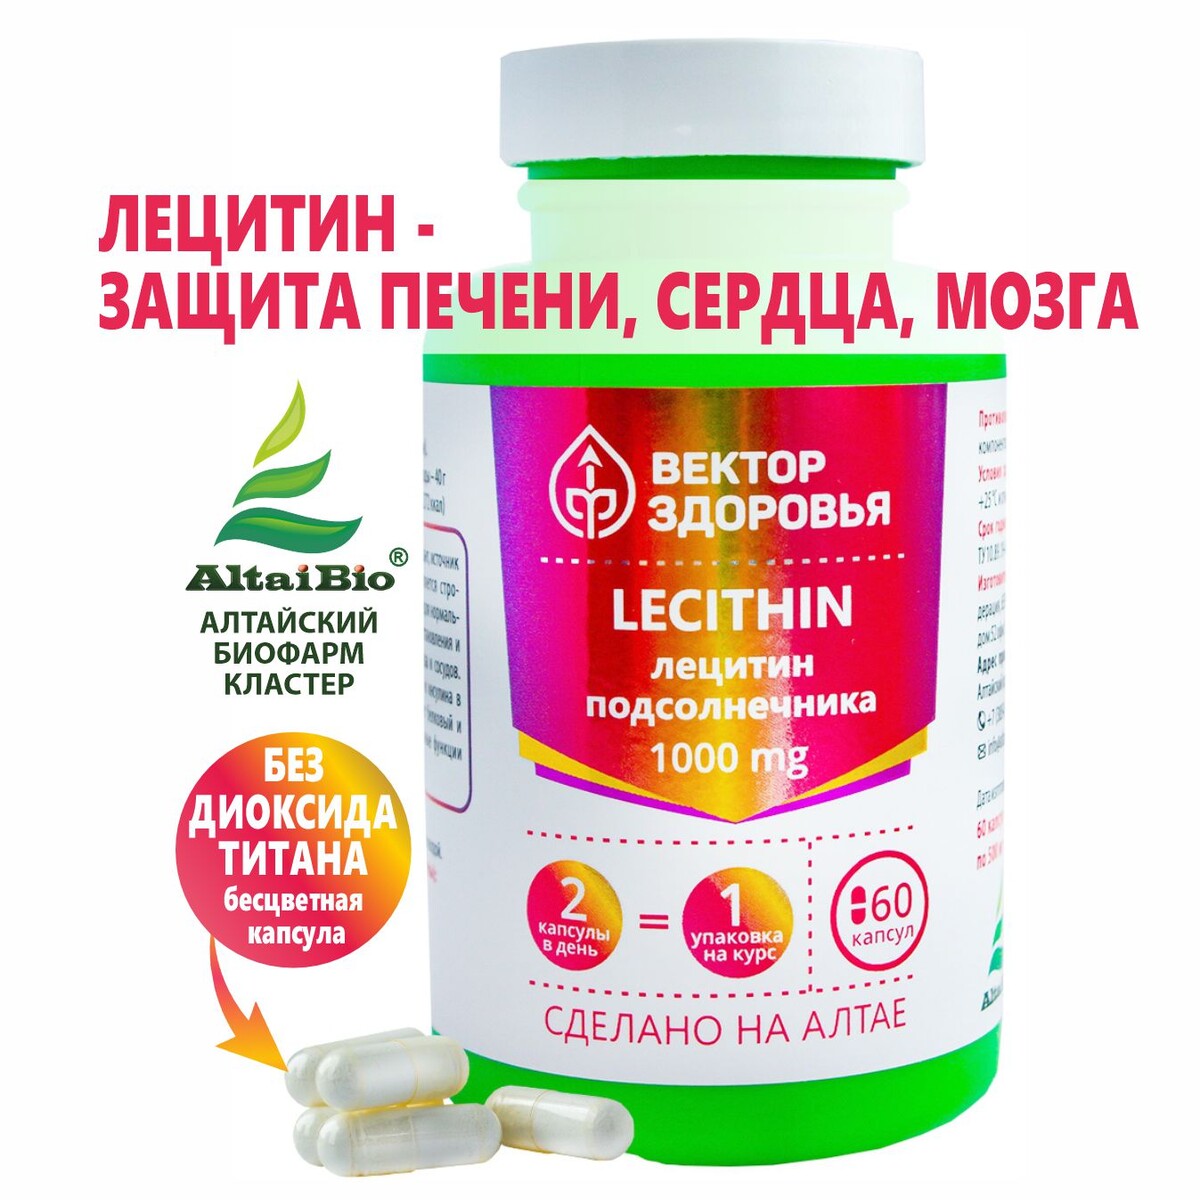 Комплекс lecithin лецитин подсолнечника